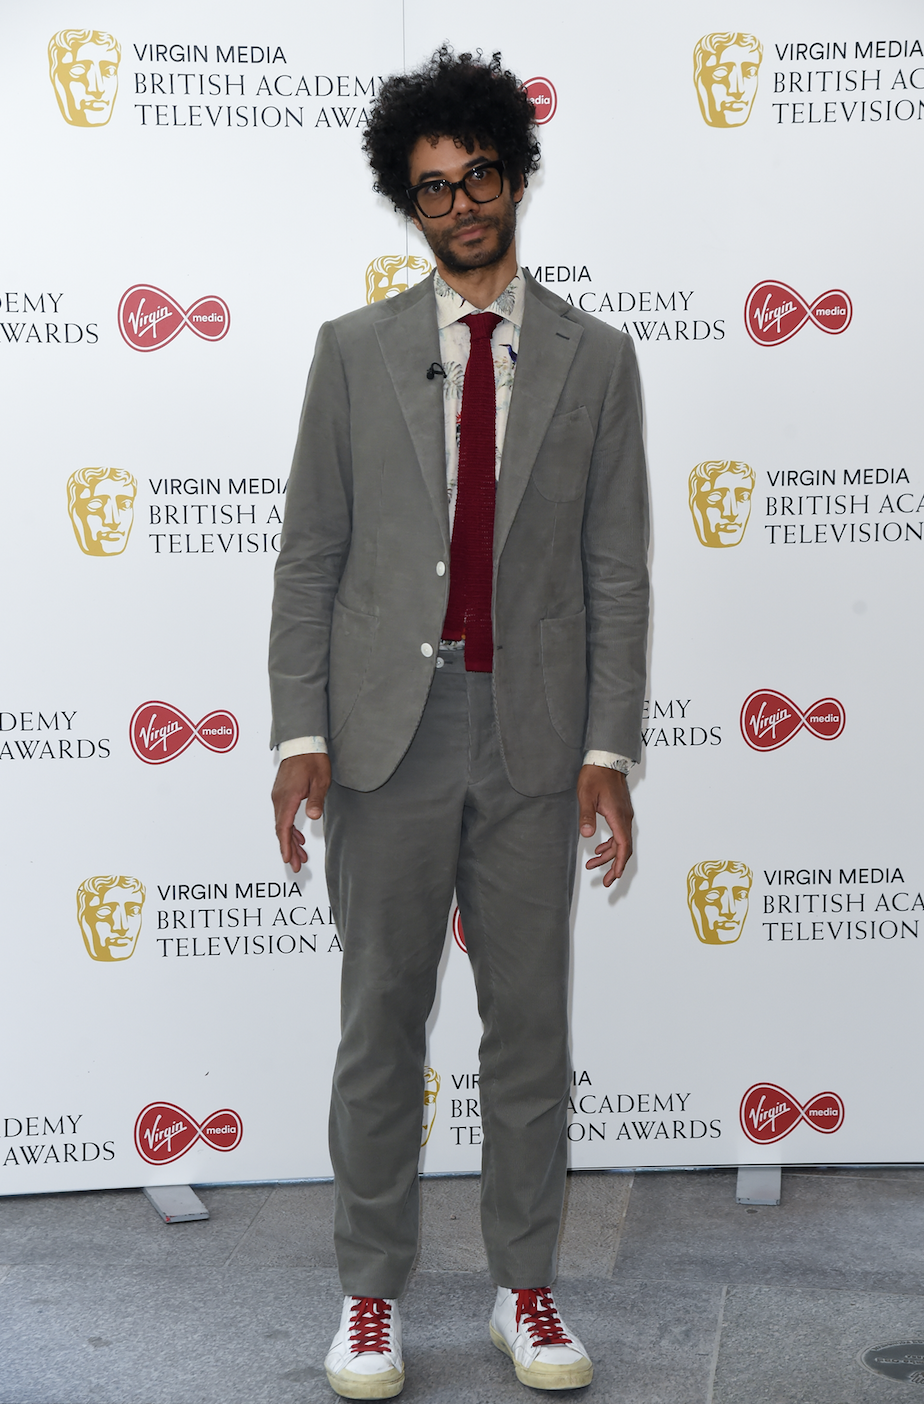 richard ayoade attends the virgin media british academy television award 2020